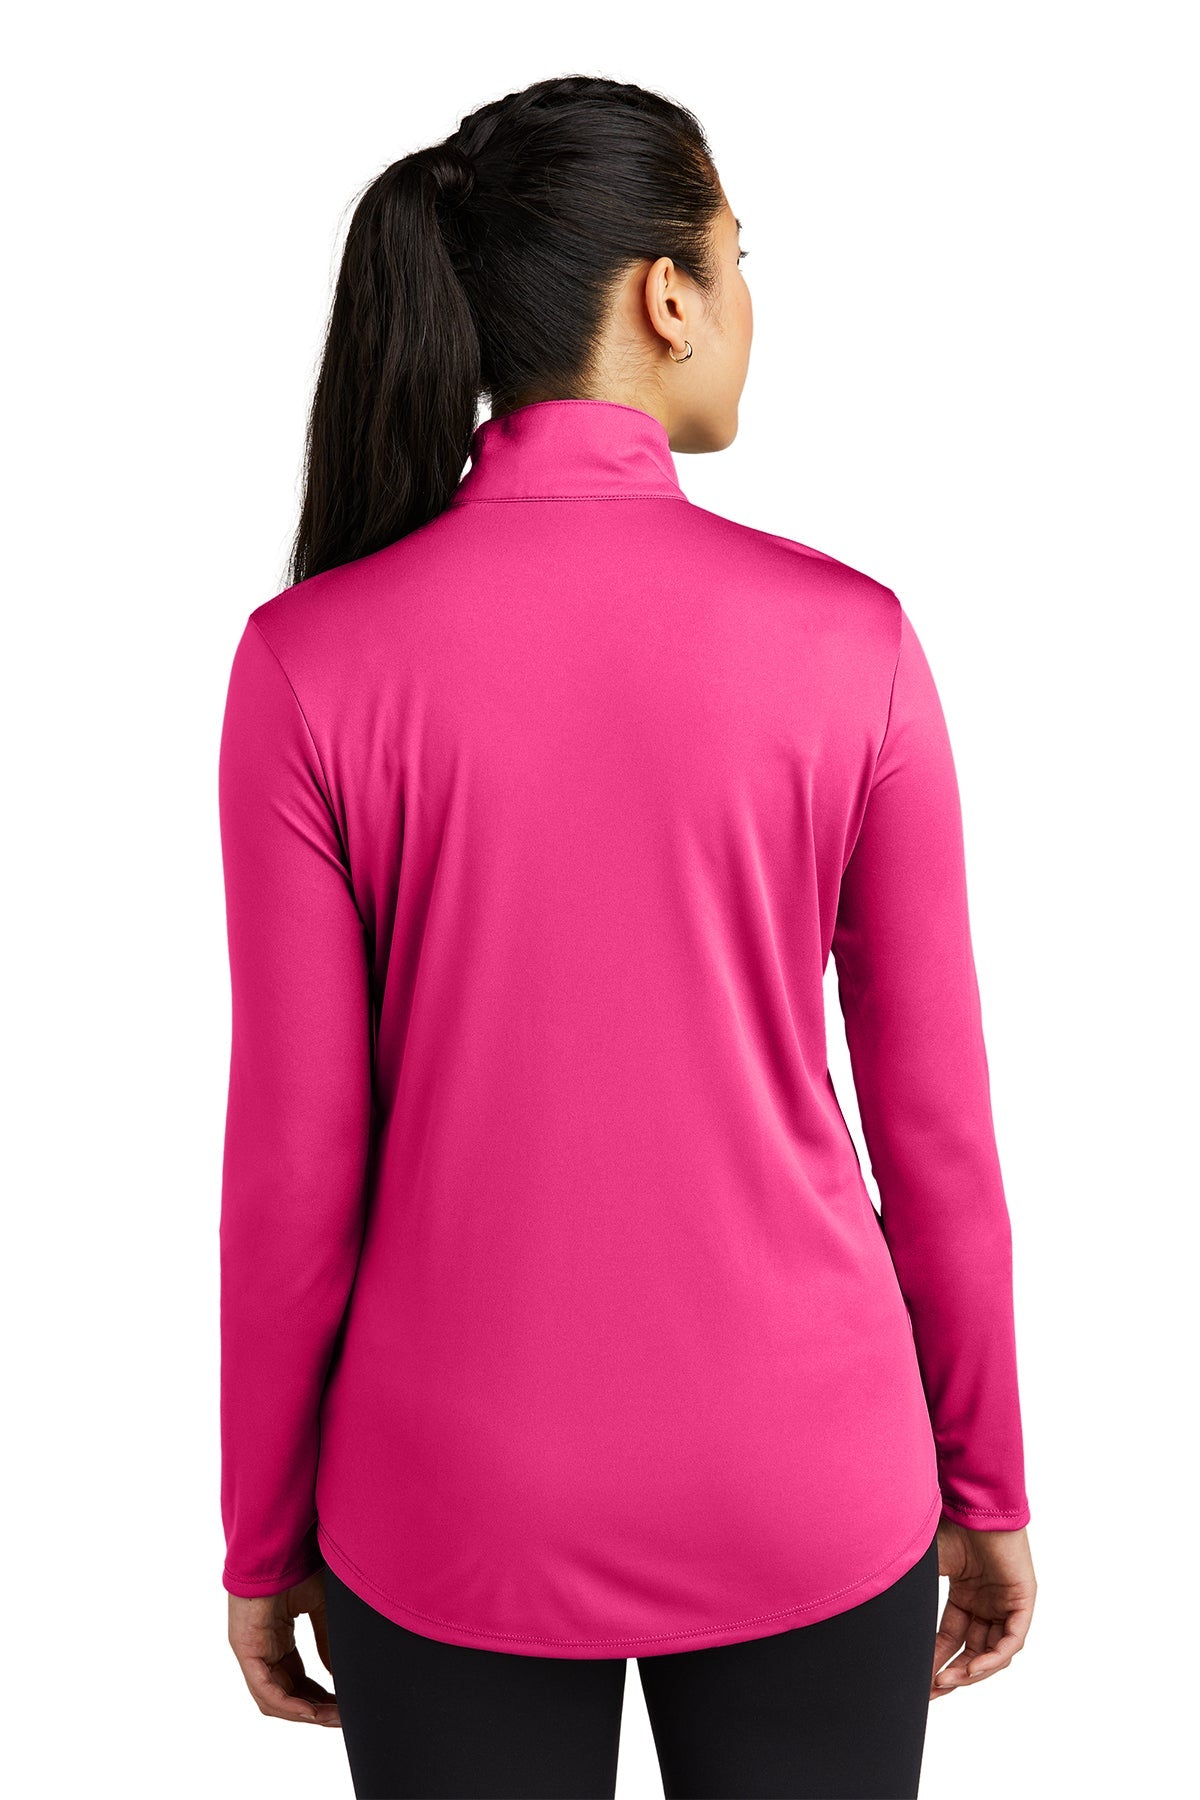 sport-tek_lst357 _pink raspberry_company_logo_sweatshirts